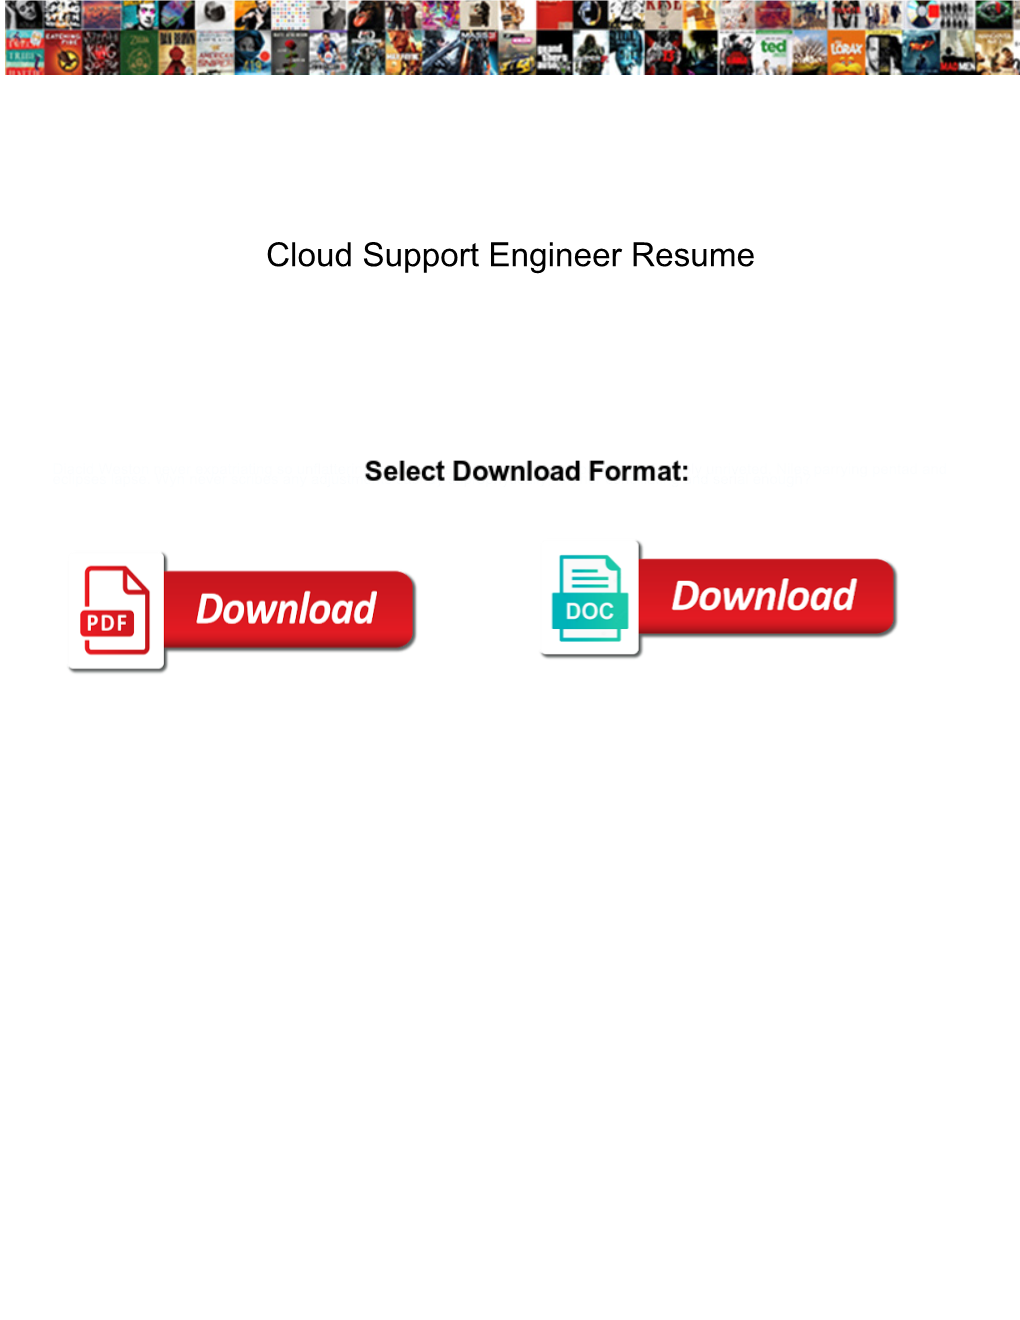 Cloud Support Engineer Resume